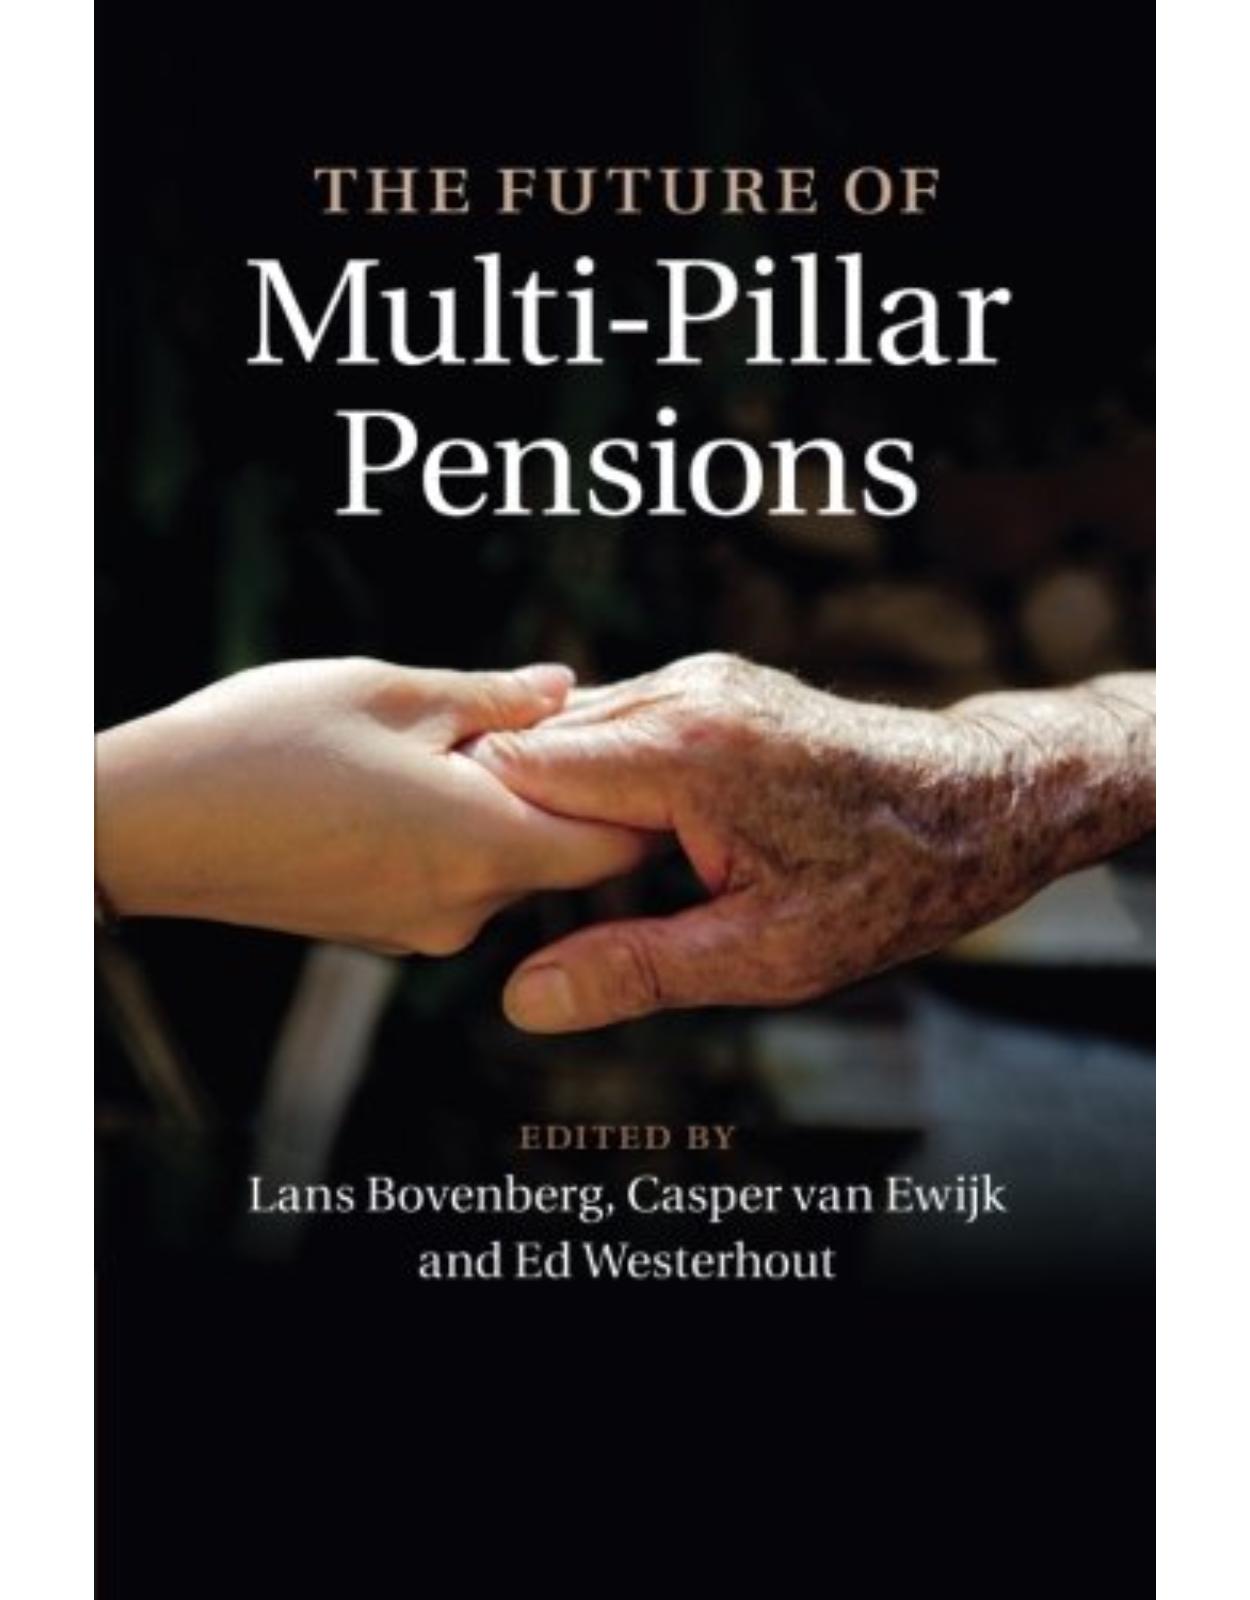 The Future of Multi-Pillar Pensions